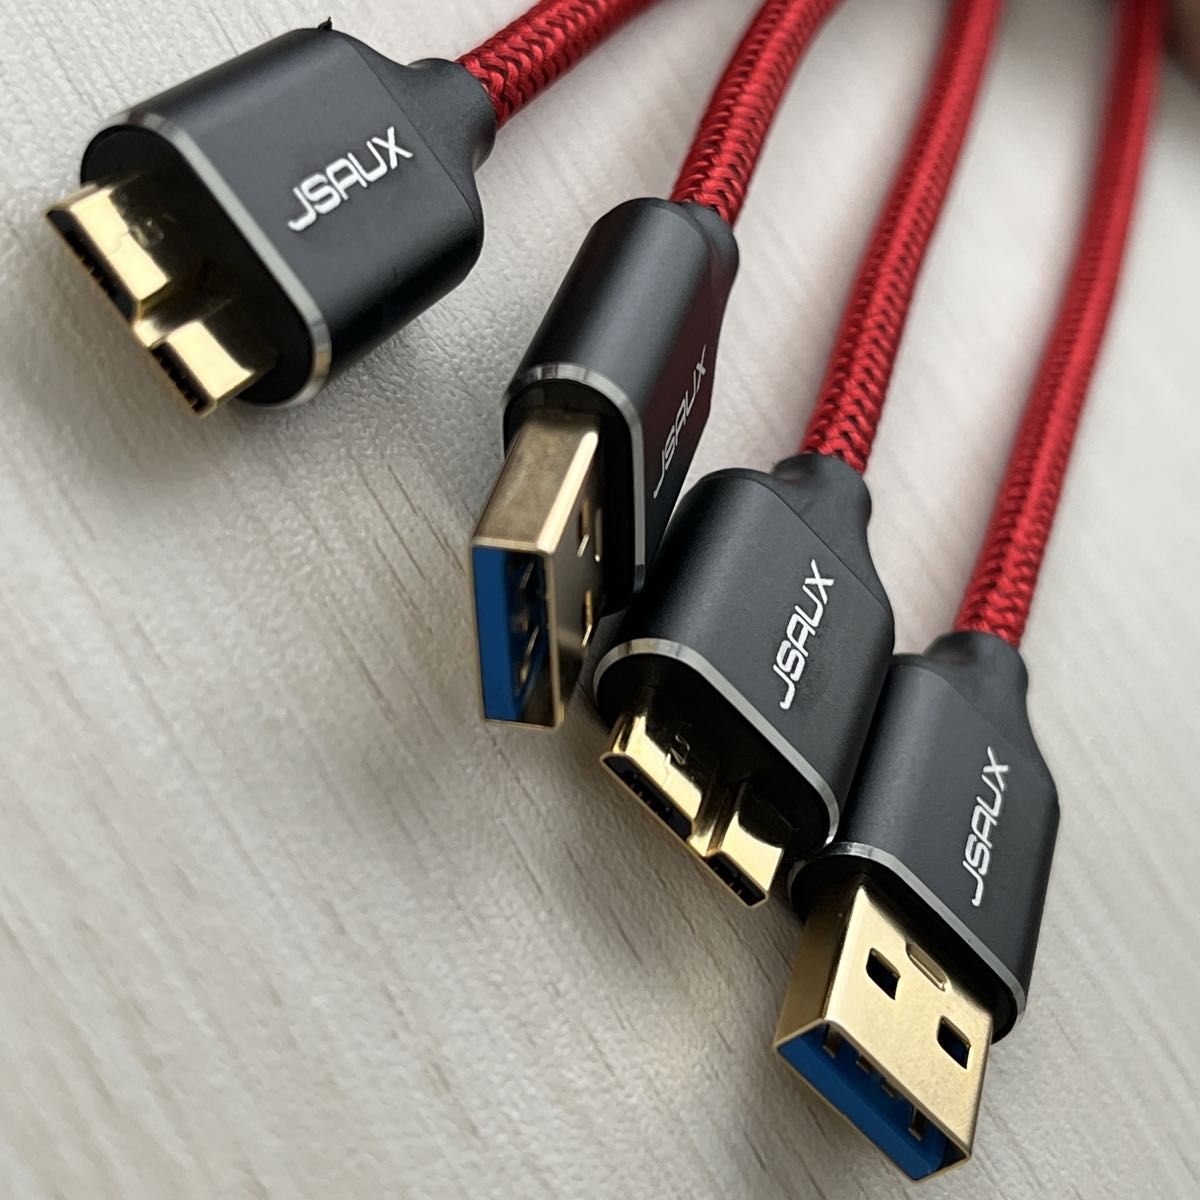 新品　JSAUC USB 3.0 ケーブル　USB A オス to microB